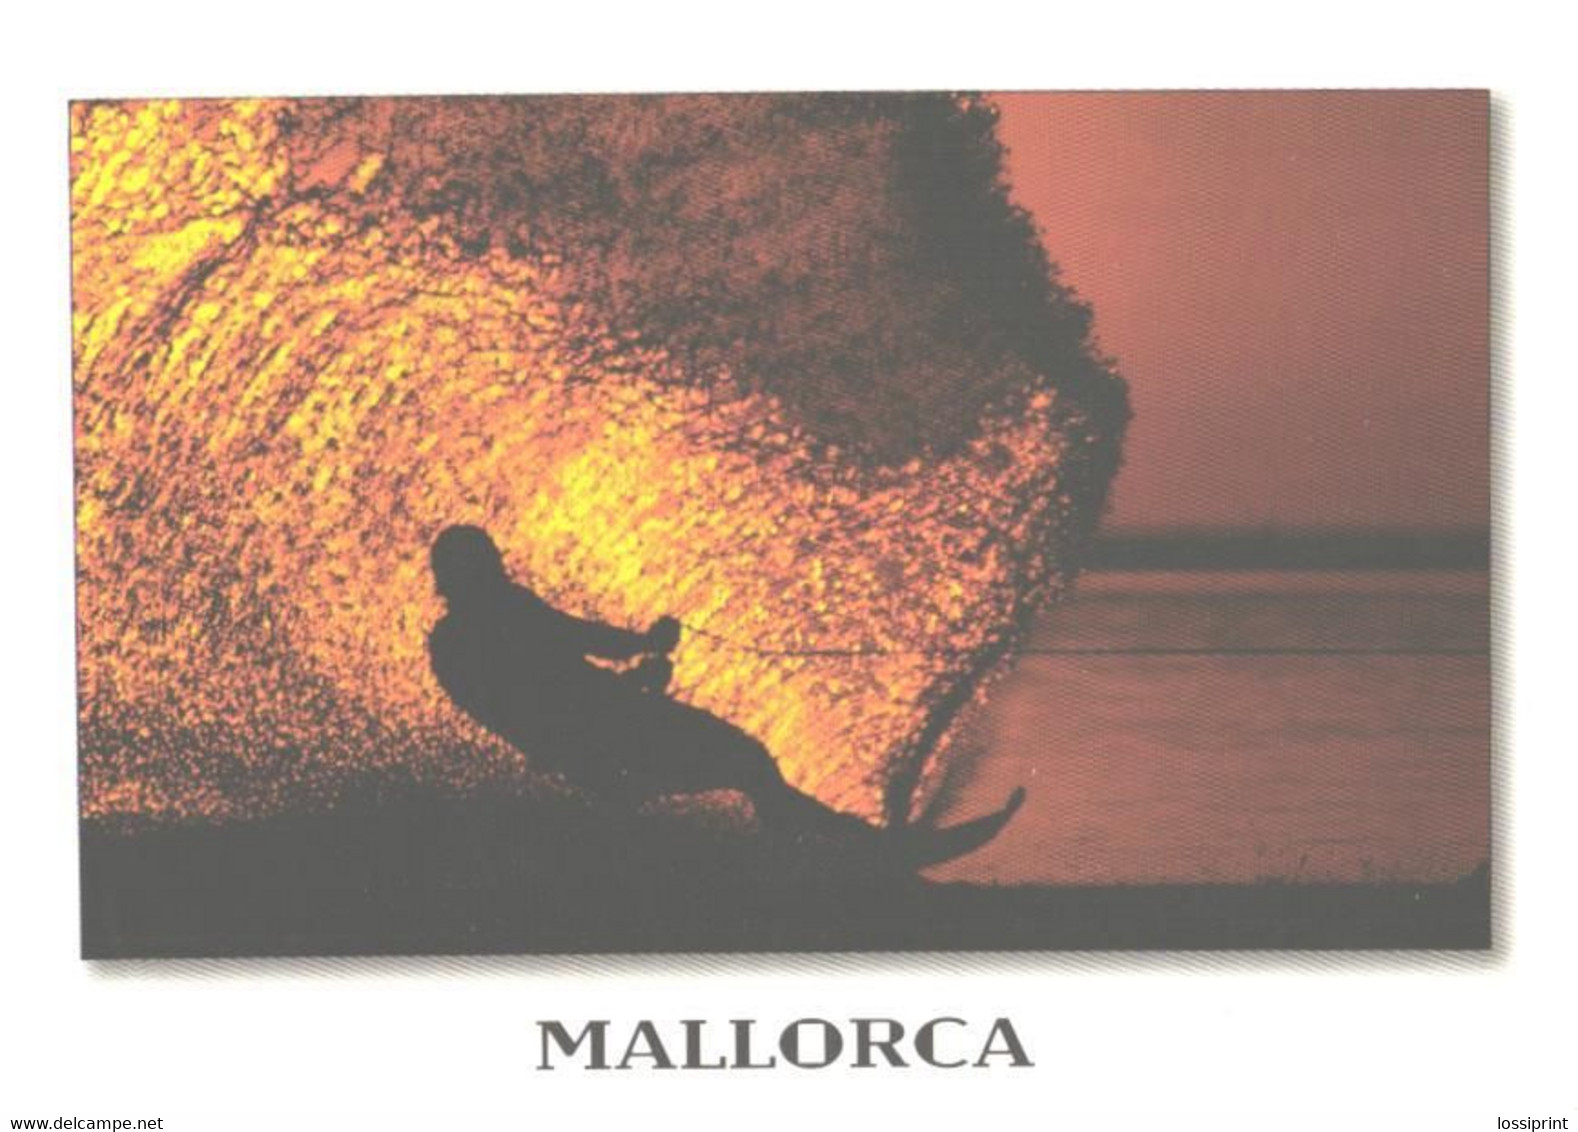 Spain:Mallorca, Waterskier At Sunset - Water-skiing